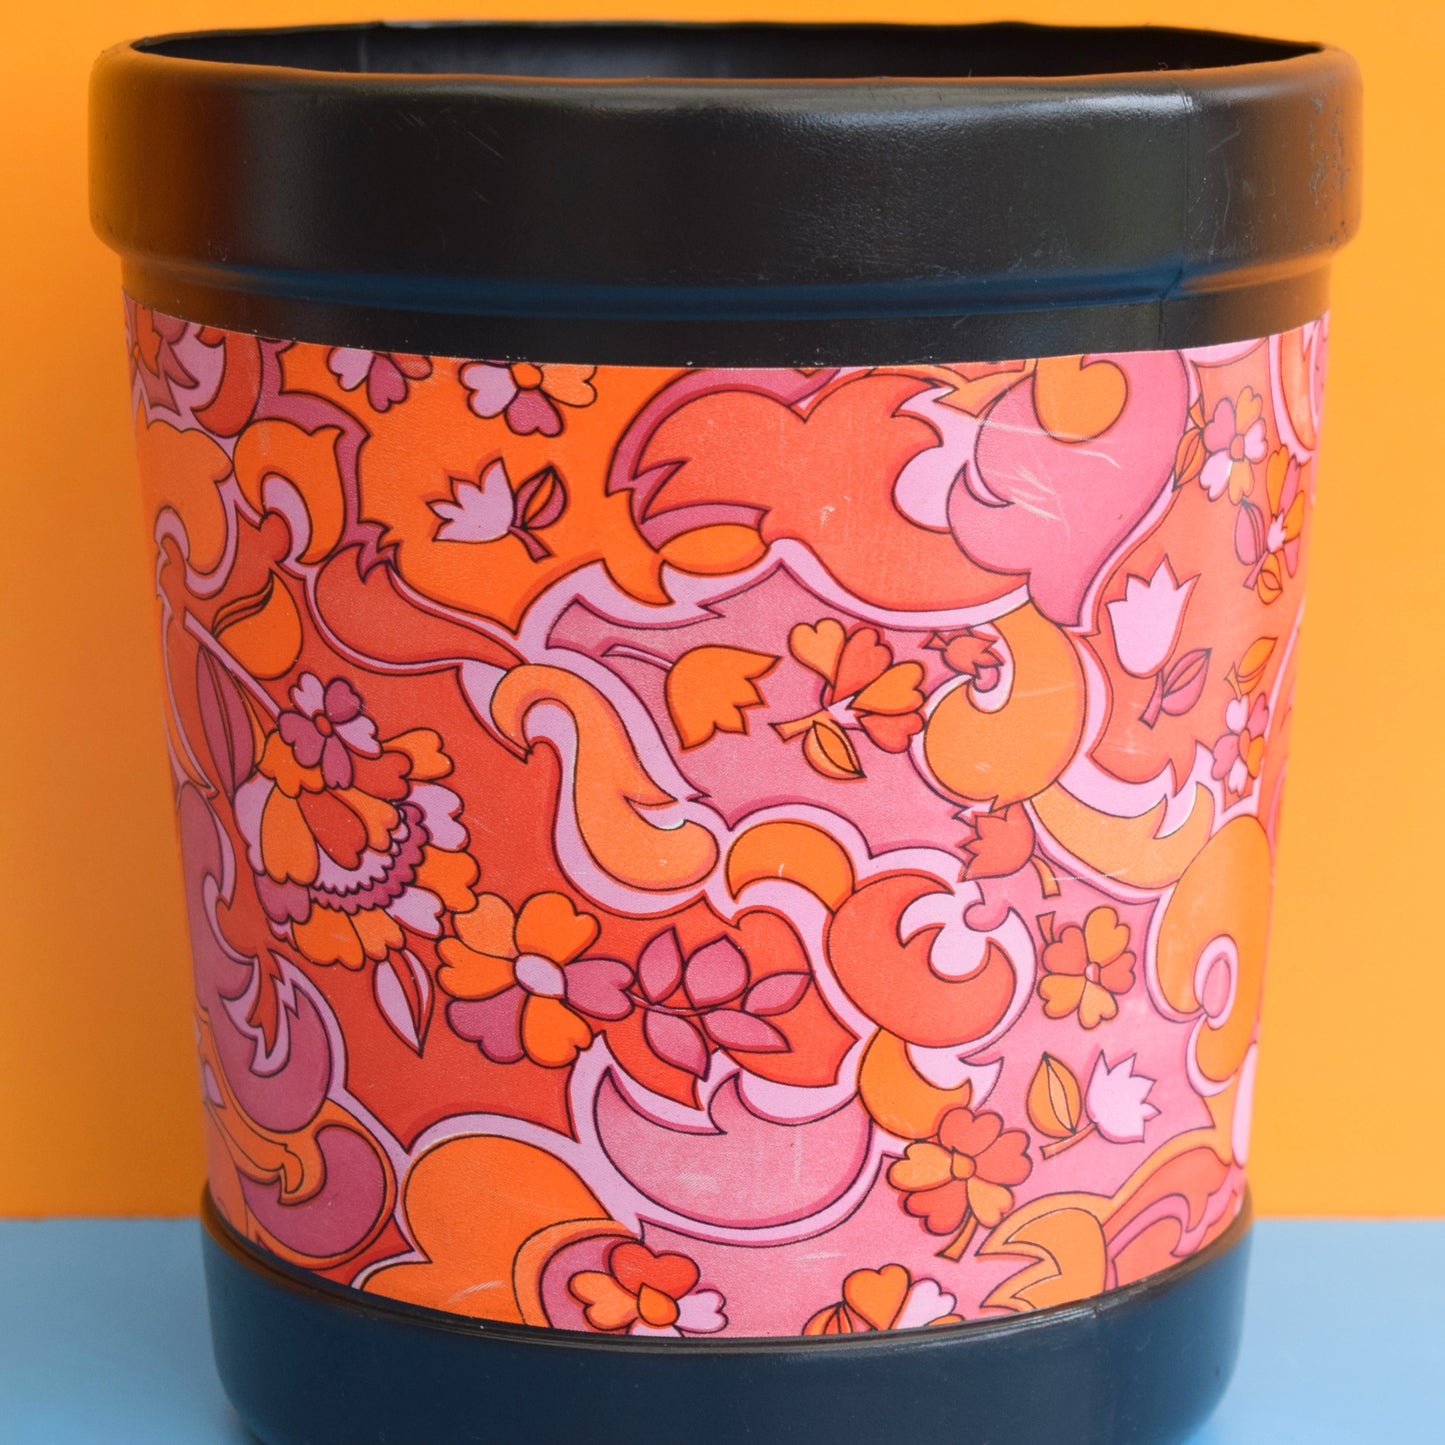 Vintage 1960s Plastic Waste Paper Bin - Pink & Orange - Plysu